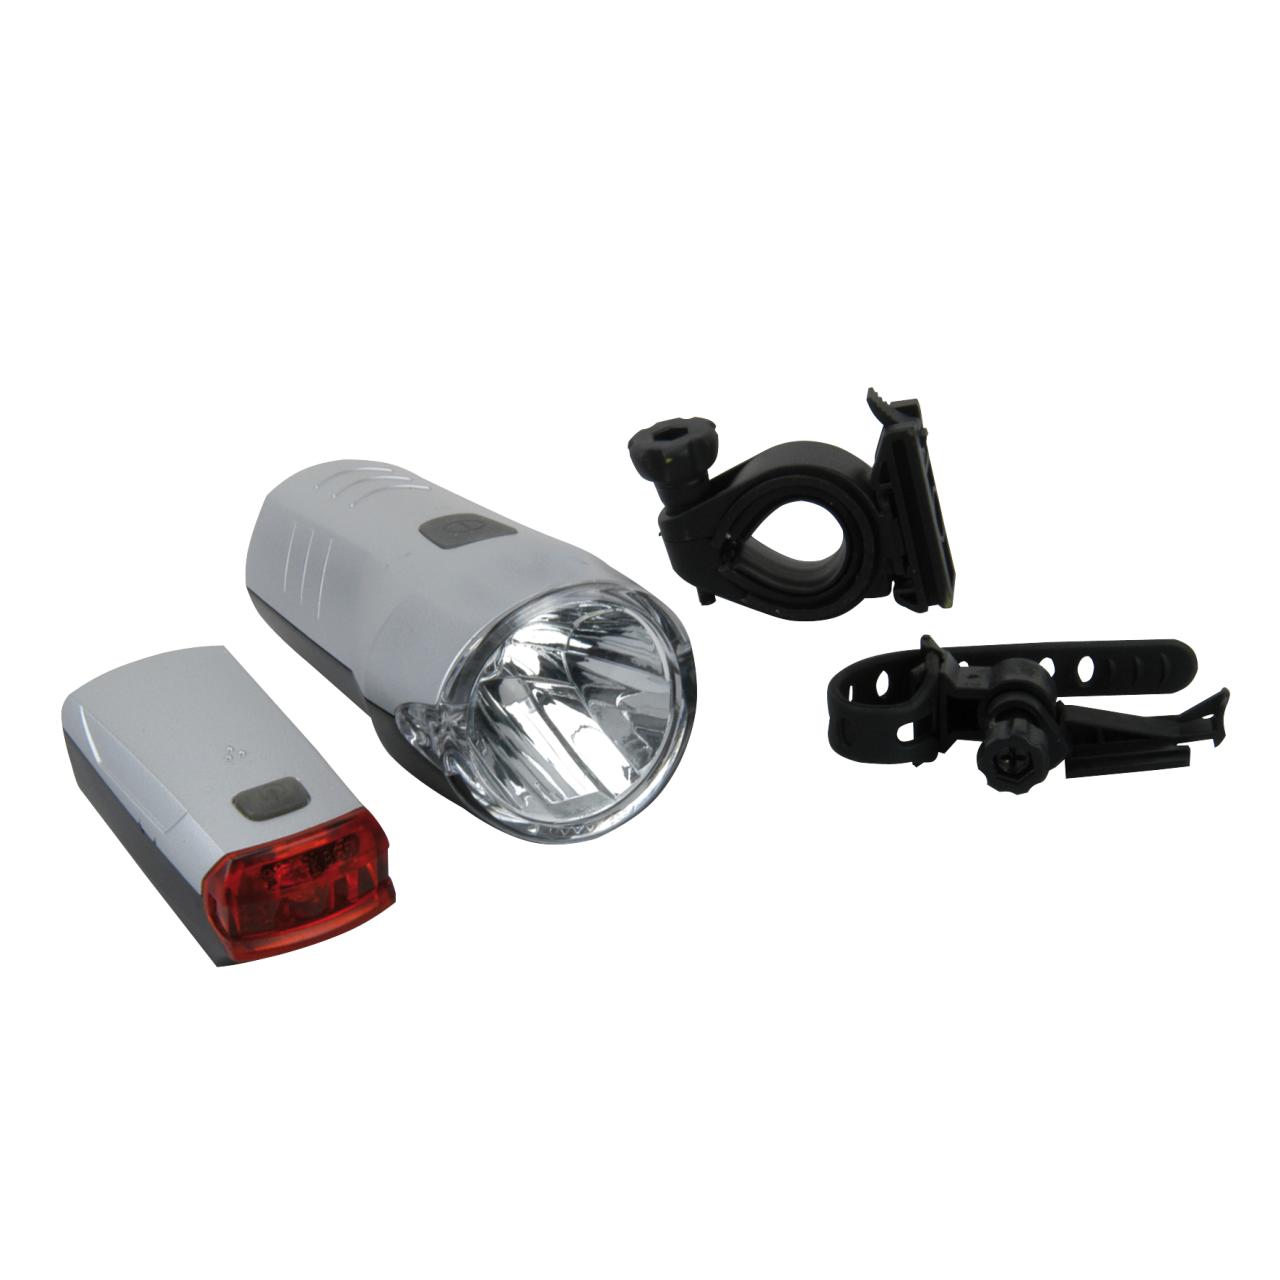 FISCHER Fahrrad Batterie-LED Beleuchtungsset 10/20 Lux